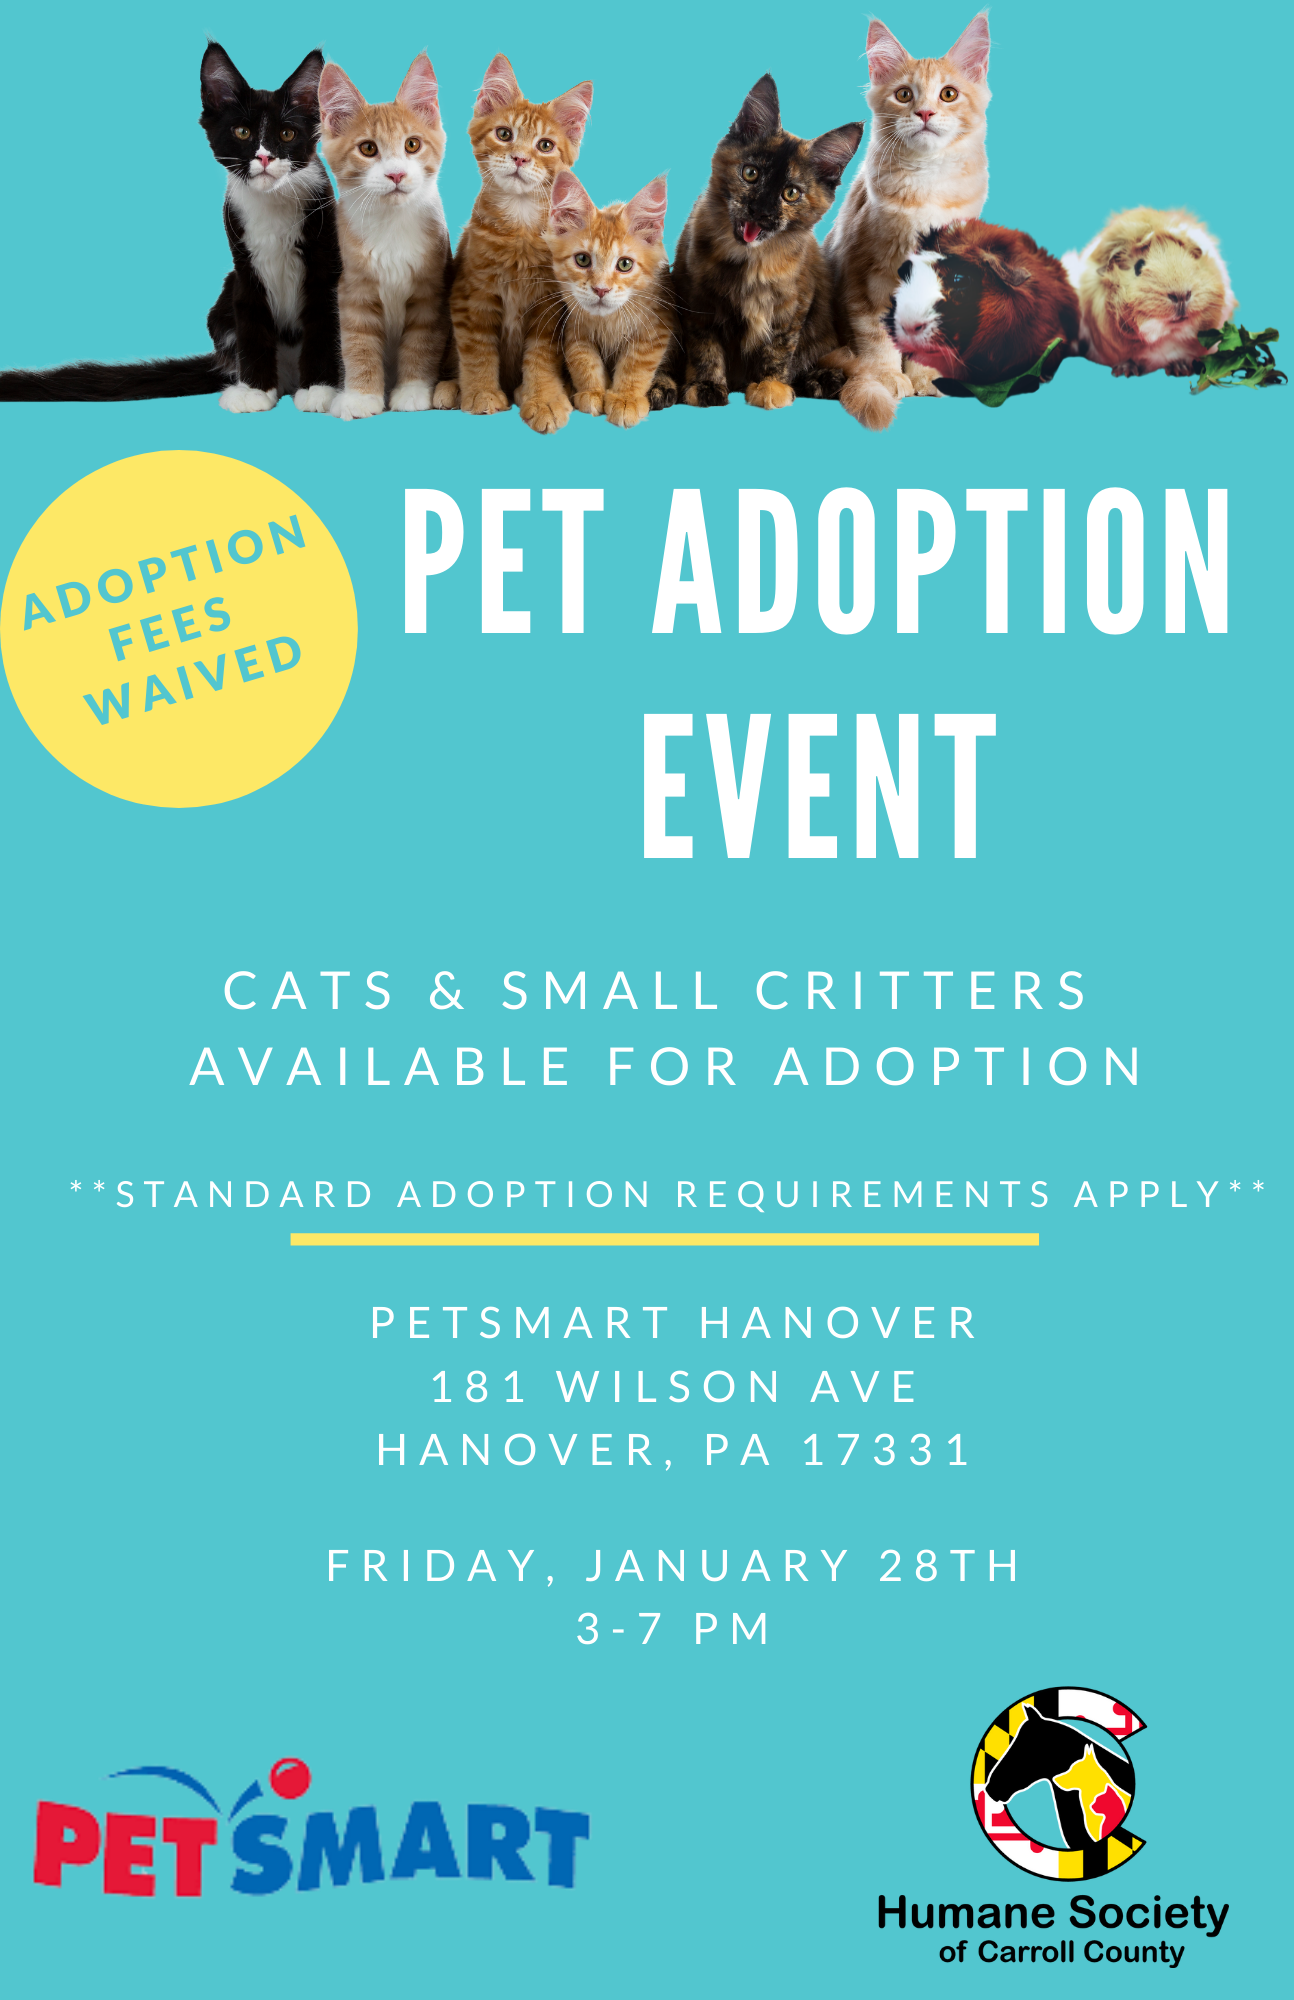 adoption-event-petsmart-hanover-pa-humane-society-of-carroll-county